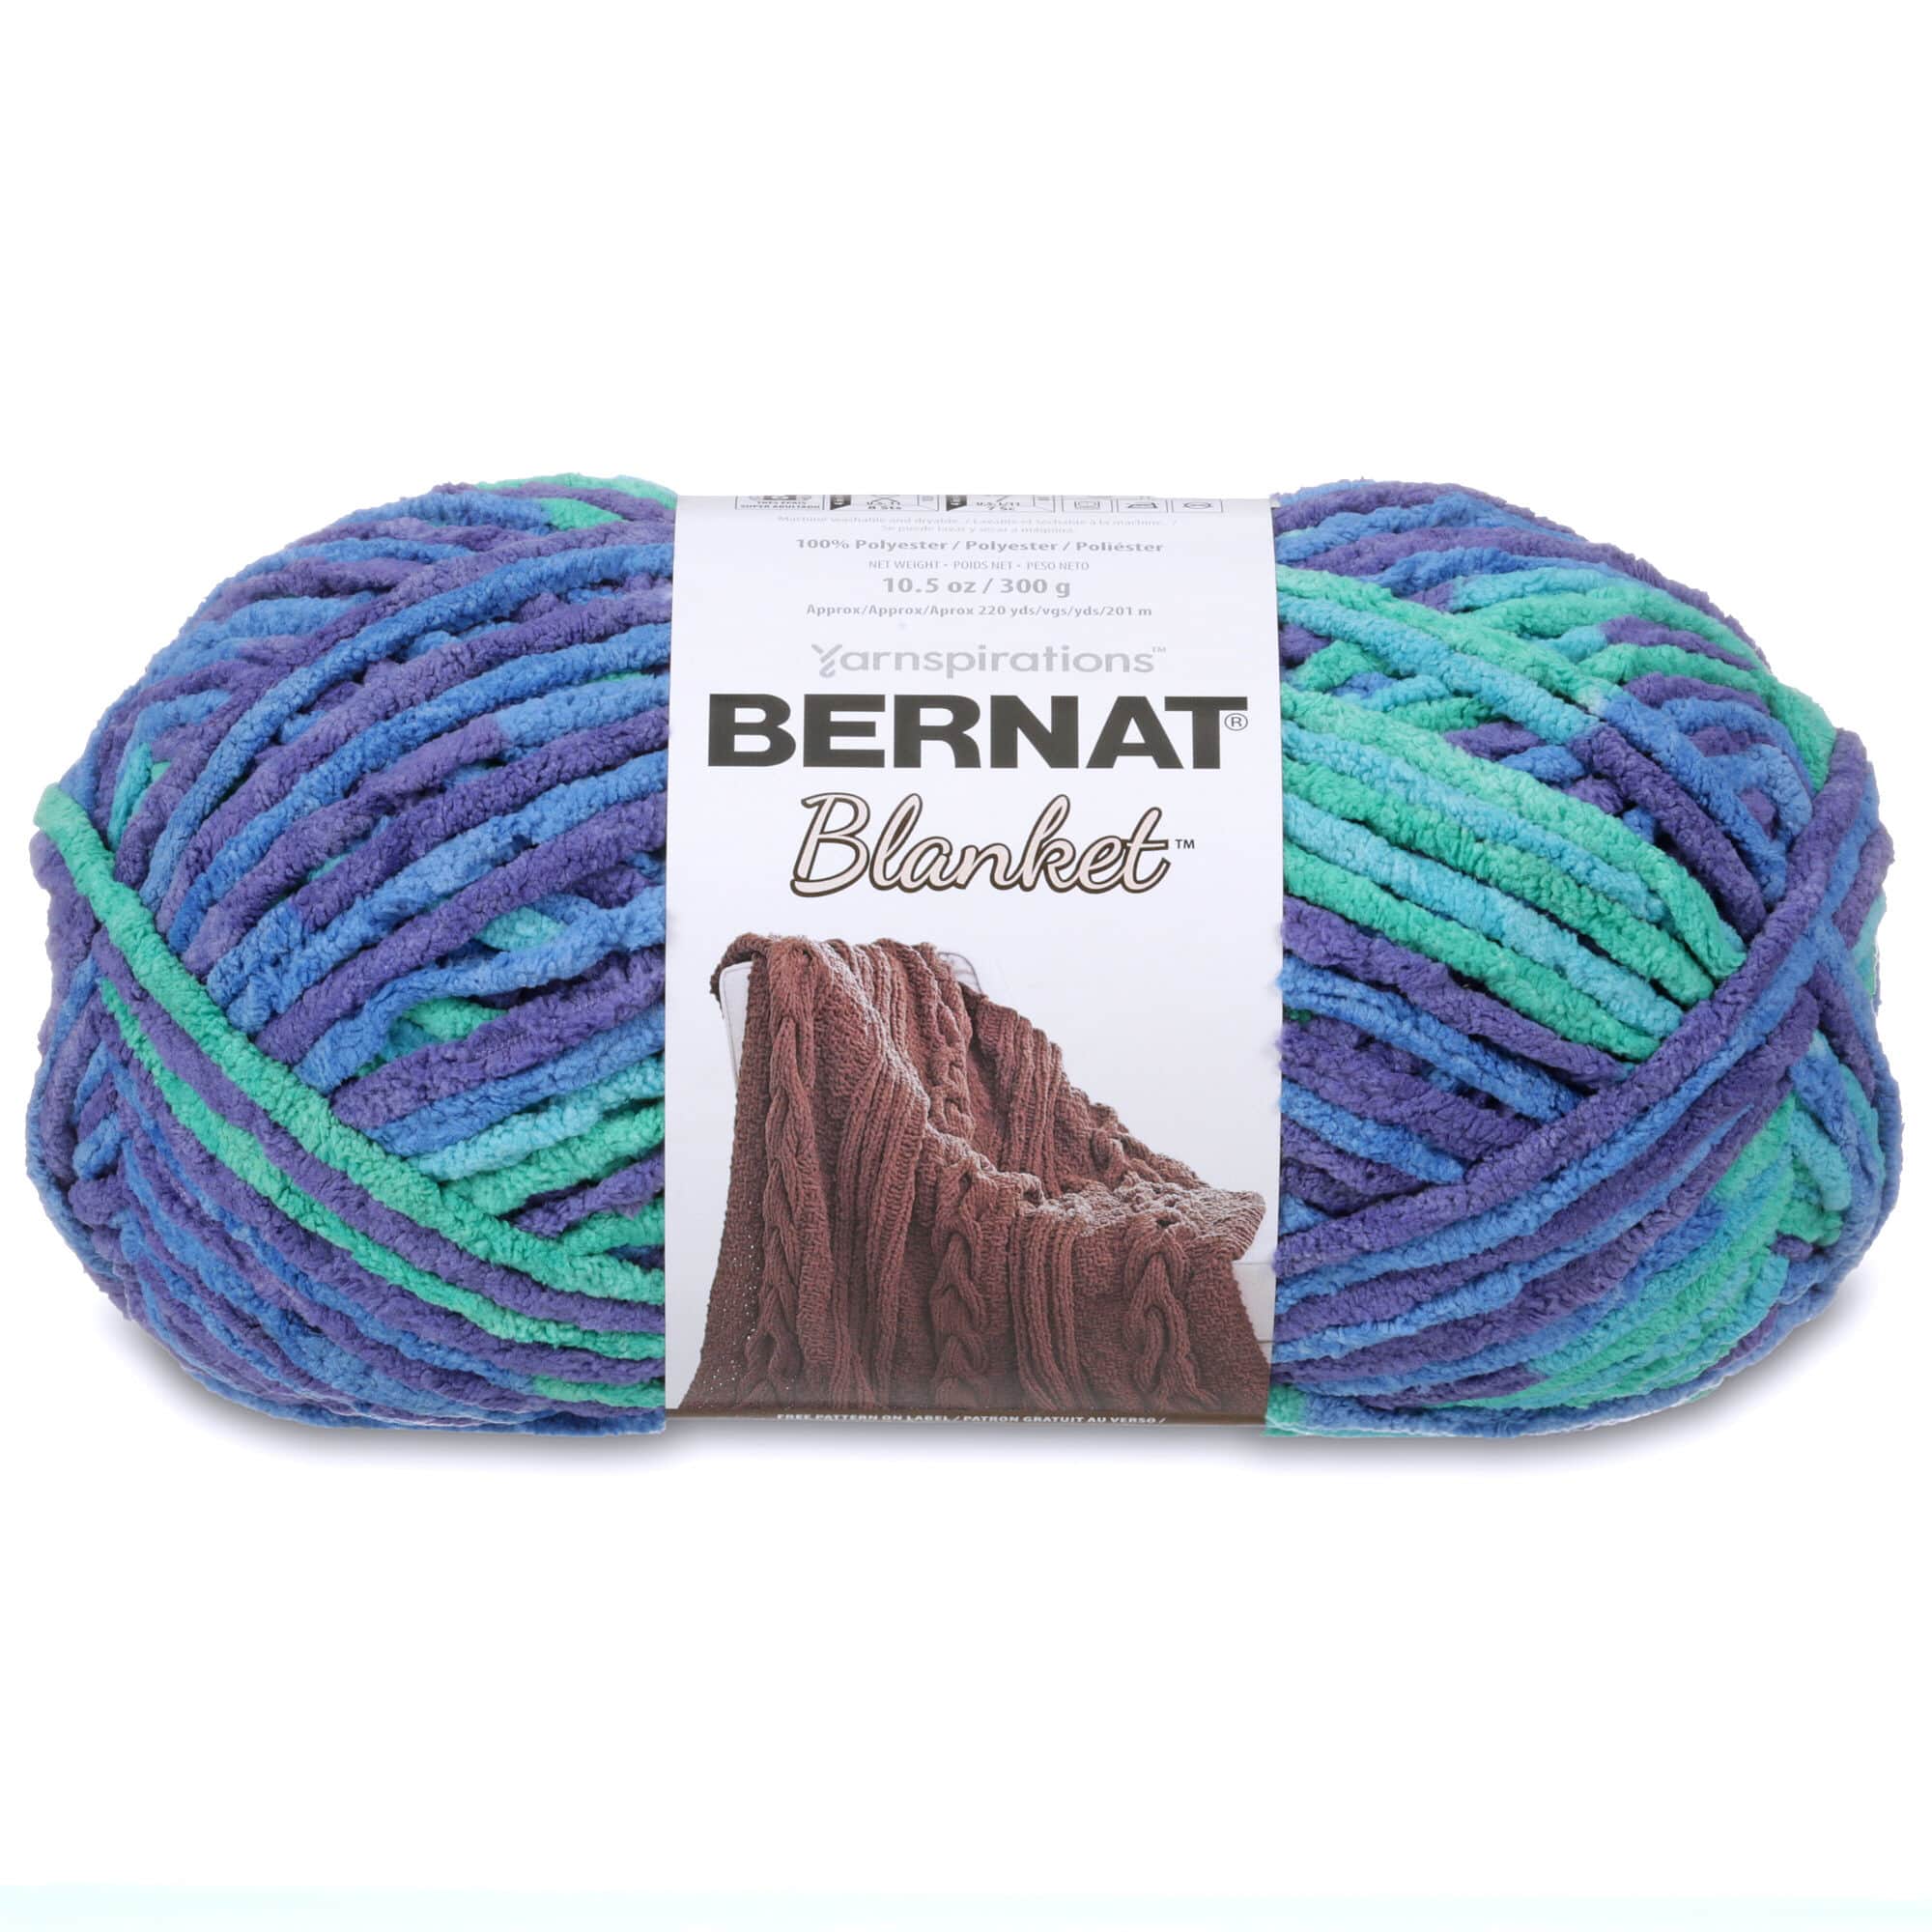 Bernat® Blanket Big™ Yarn, Michaels